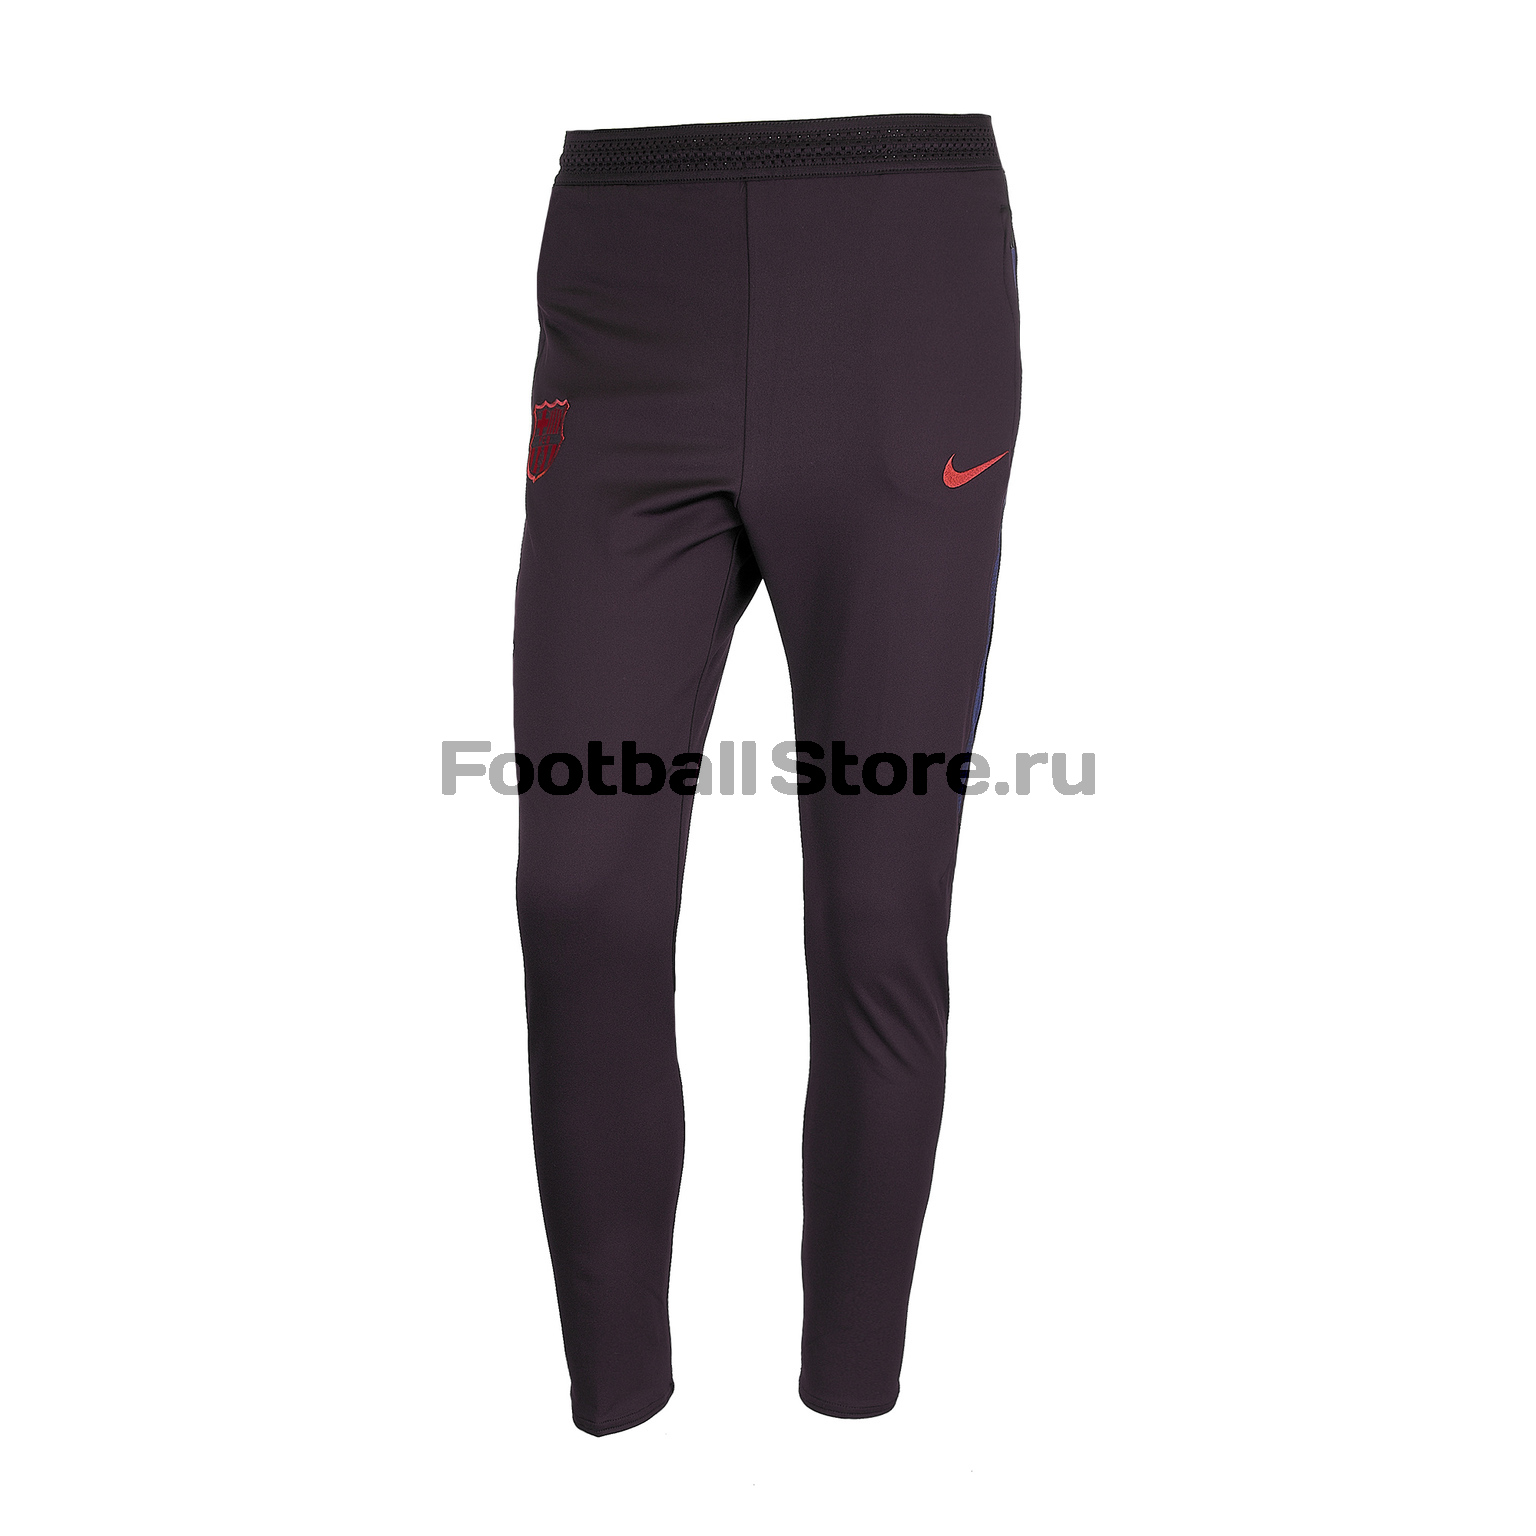 Брюки подростковые Nike Barcelona Dry Strike Pant AO6357-659